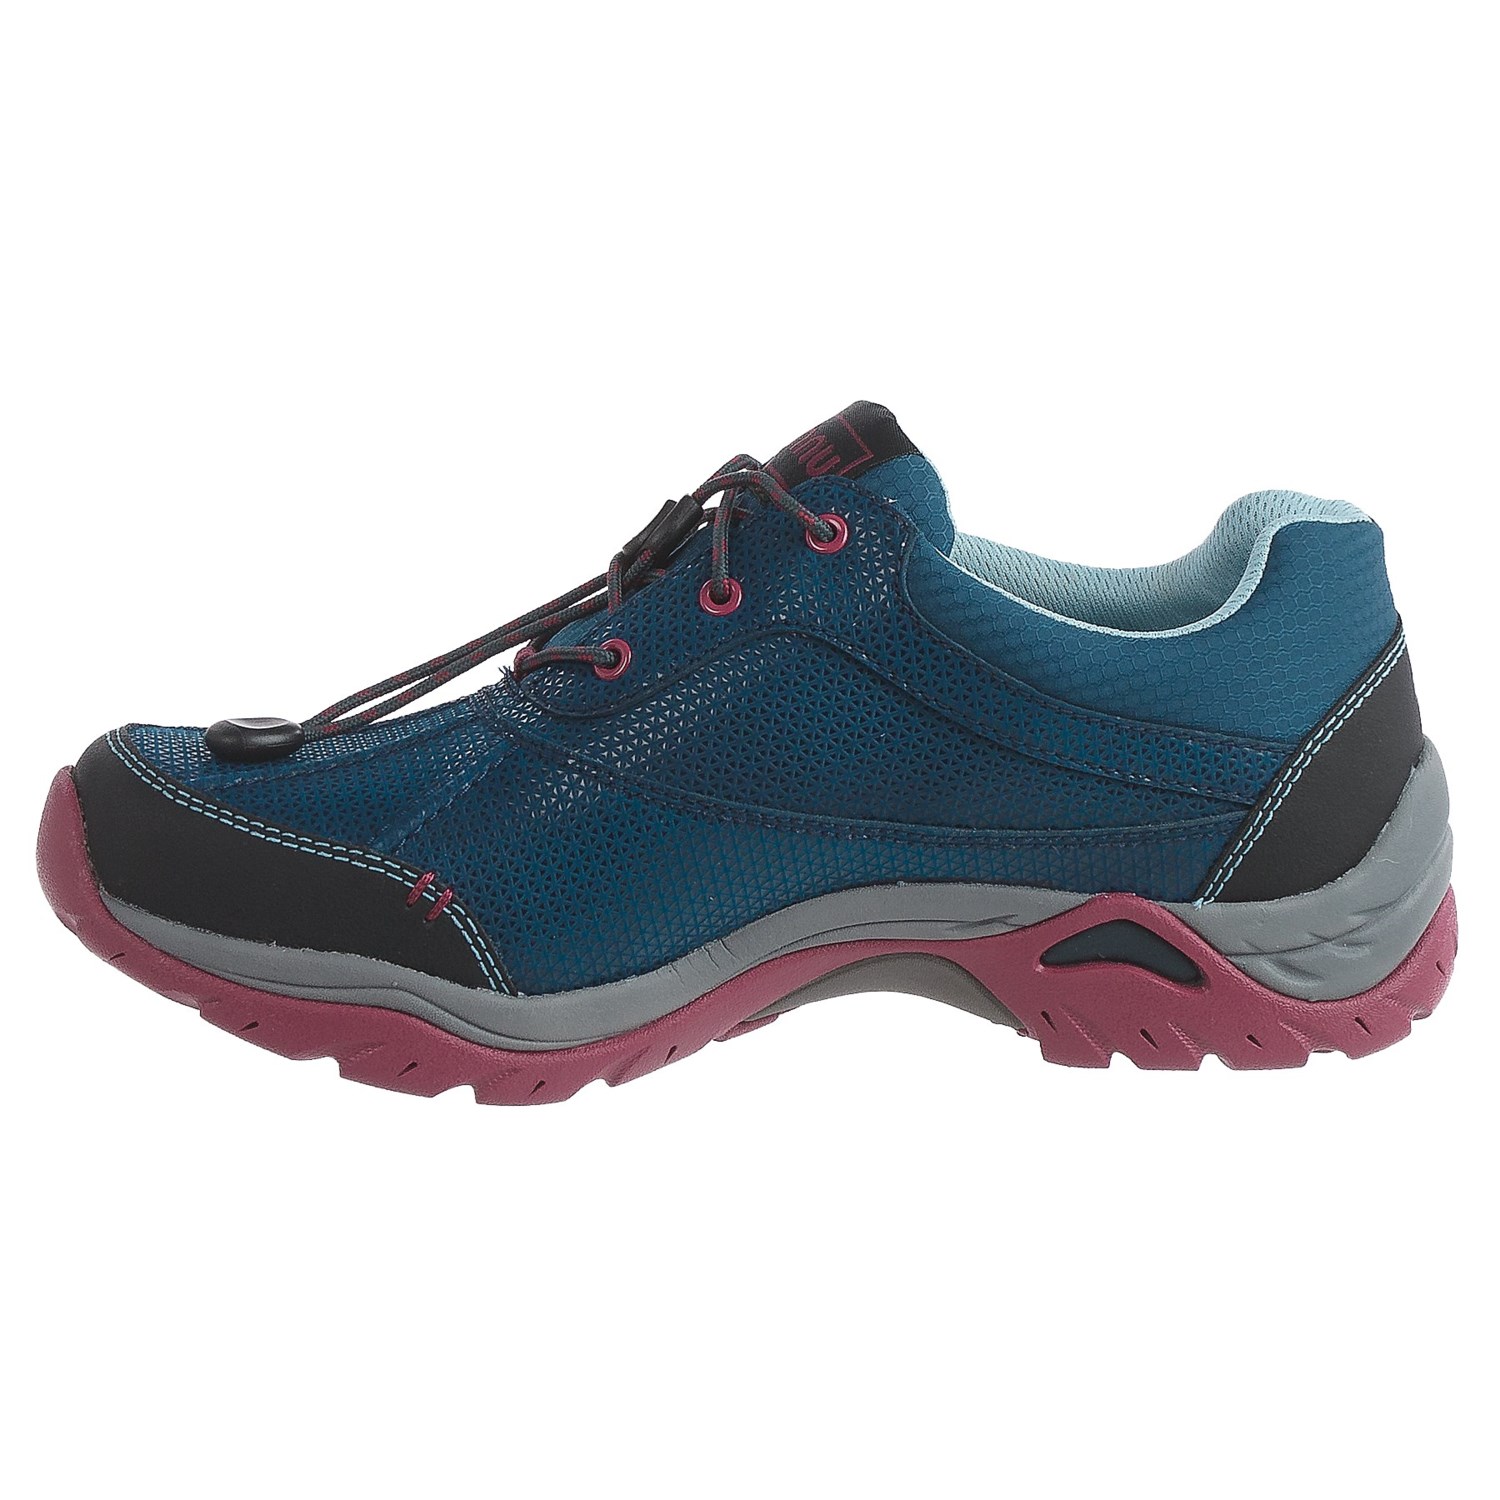 Ahnu Calaveras Hiking Shoes (For Women) - Save 58%